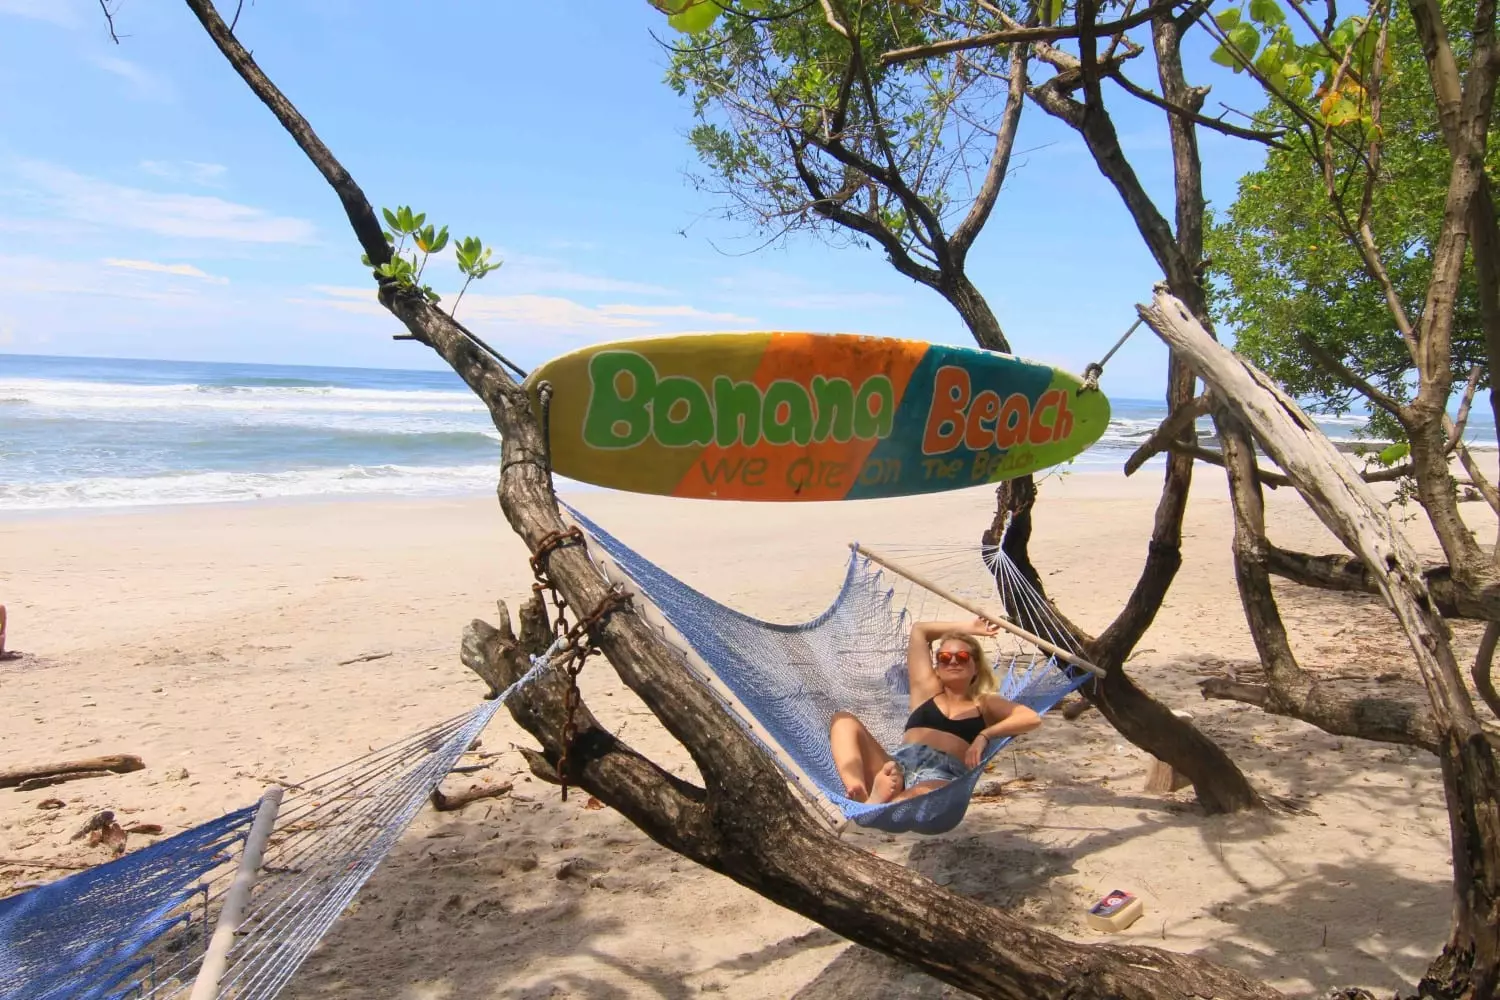 Girl in hammock on beach with surfingboard